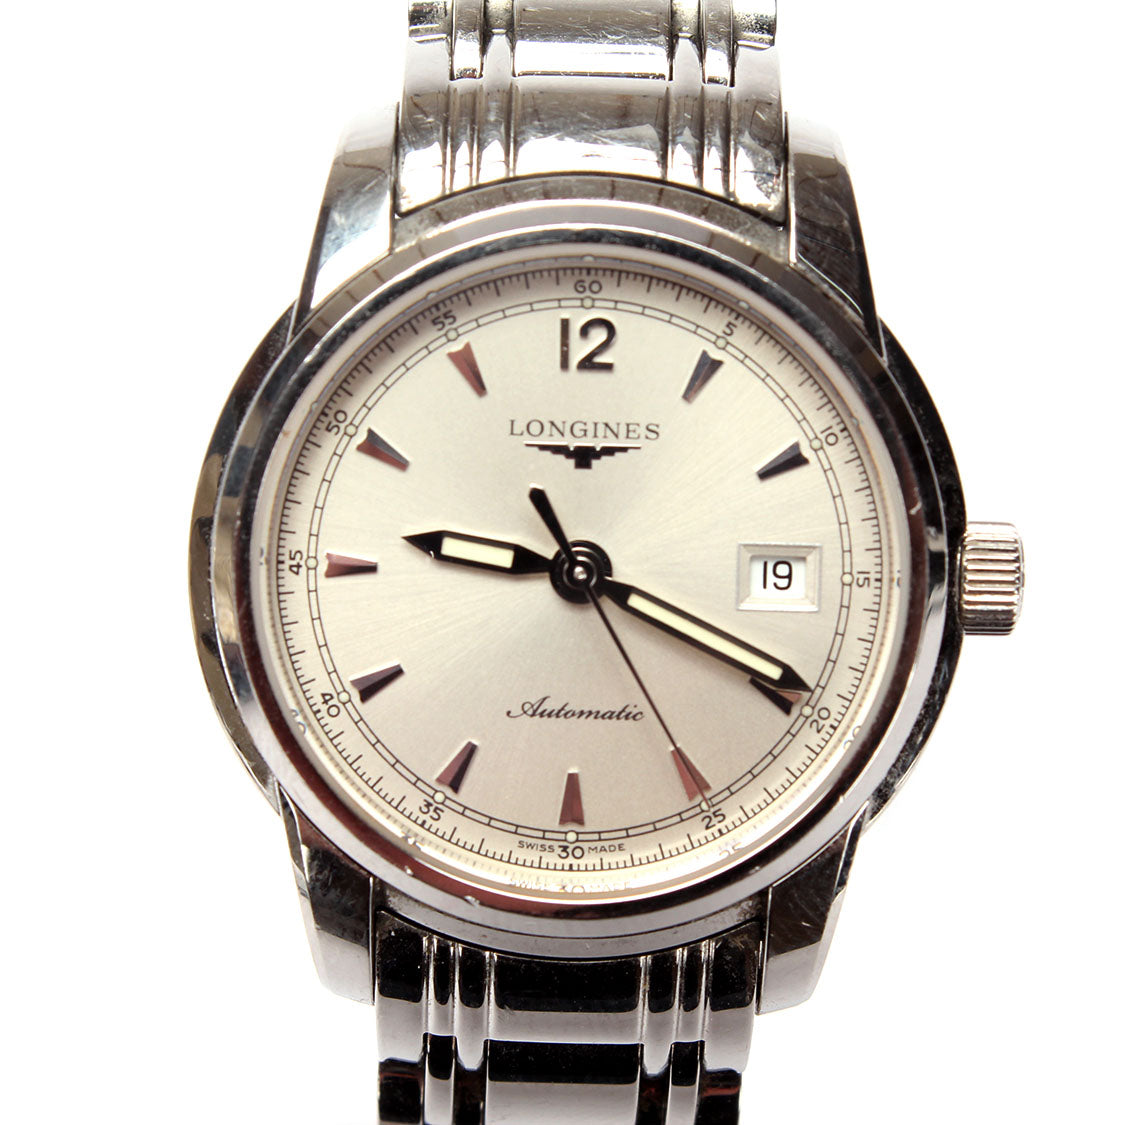 Automatic Saint-Imier Wrist Watch